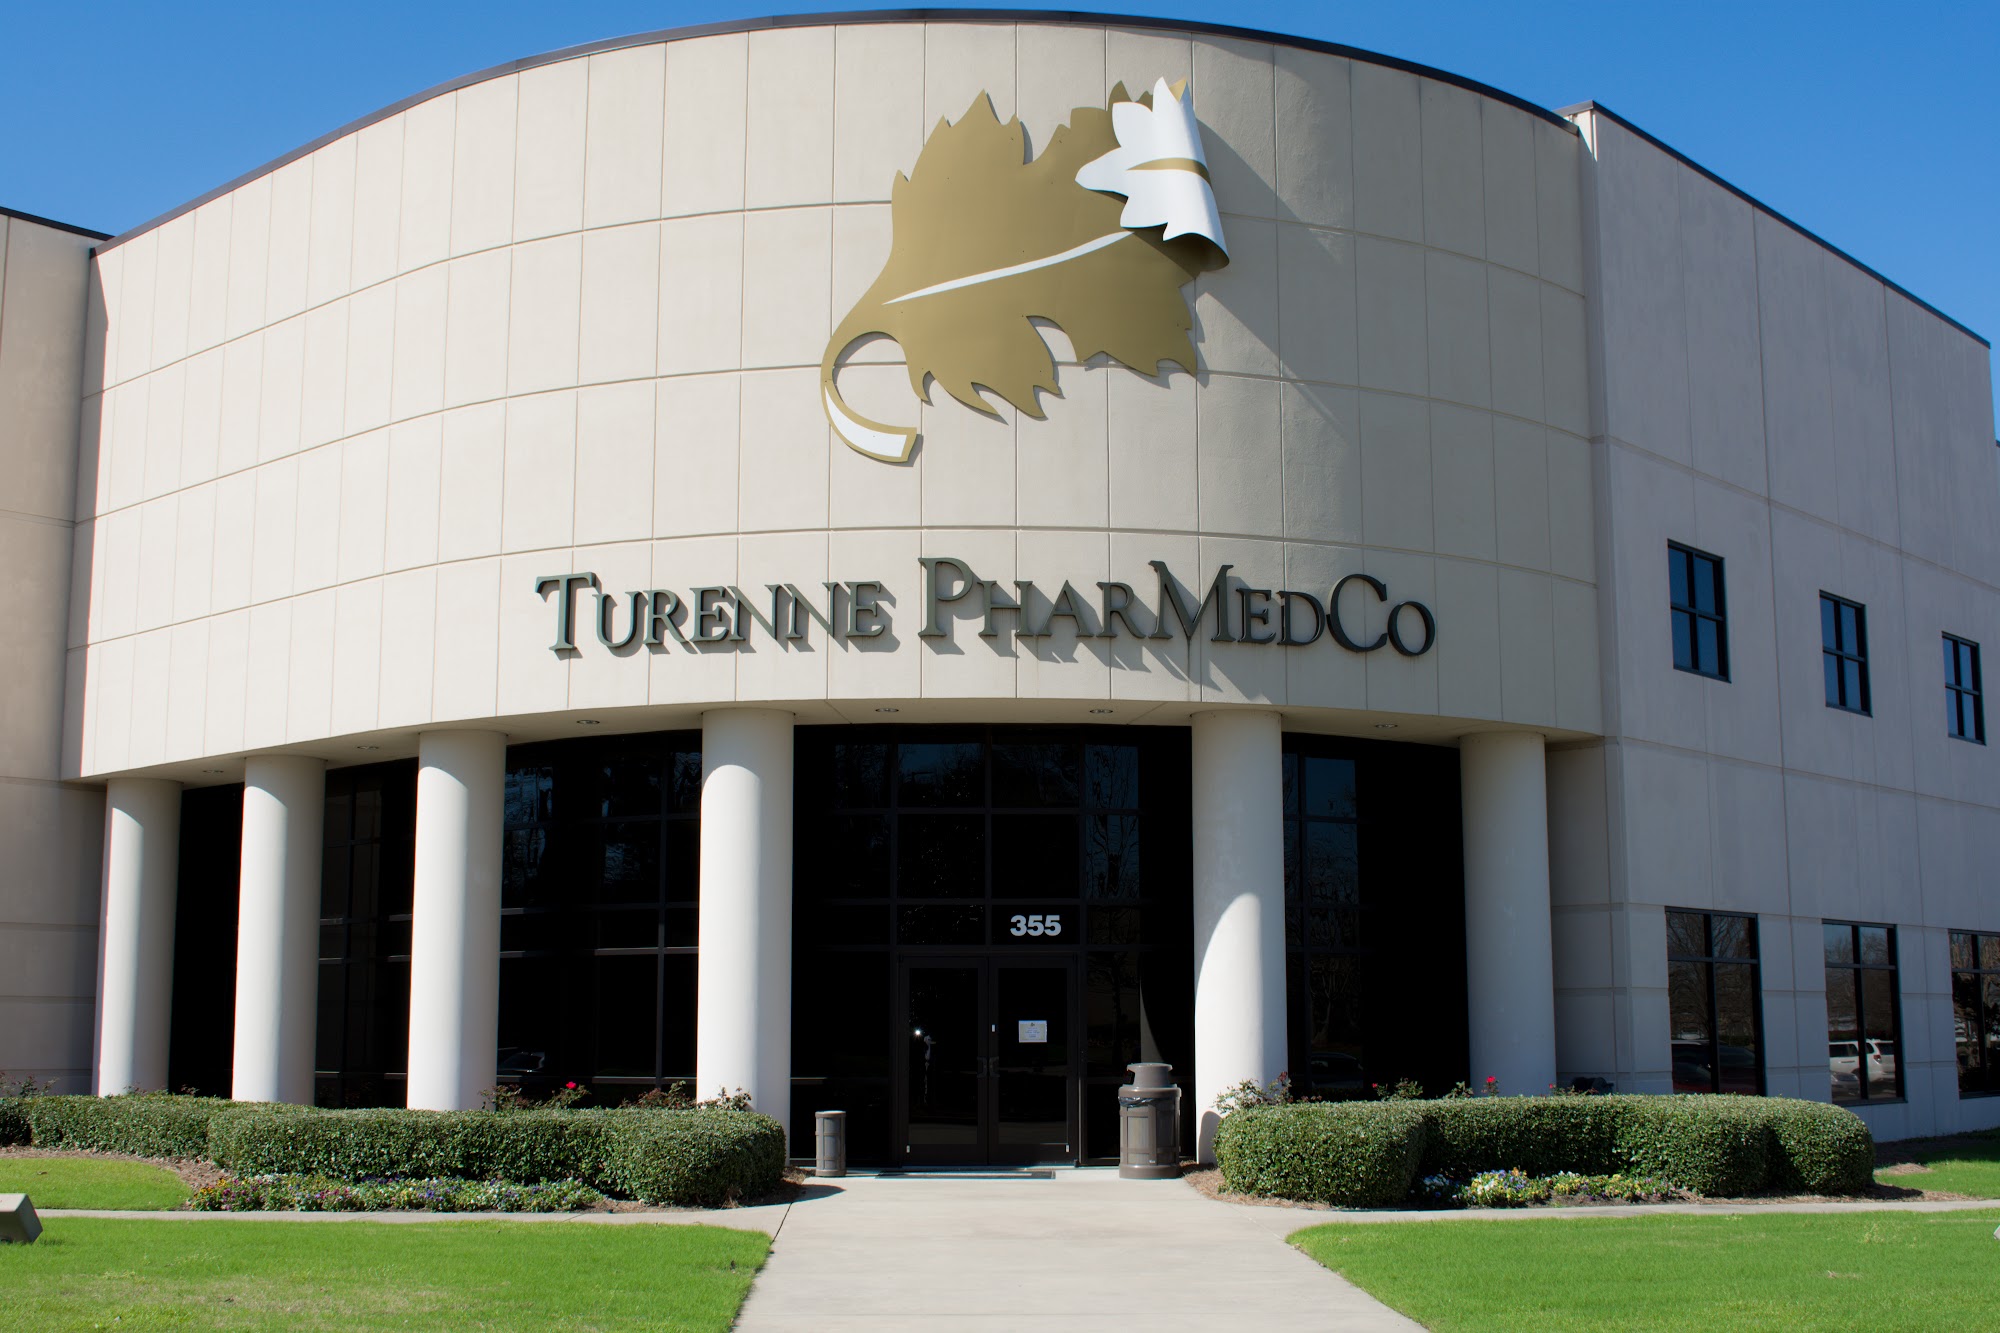 Turenne PharMedCo Pharmacy Services